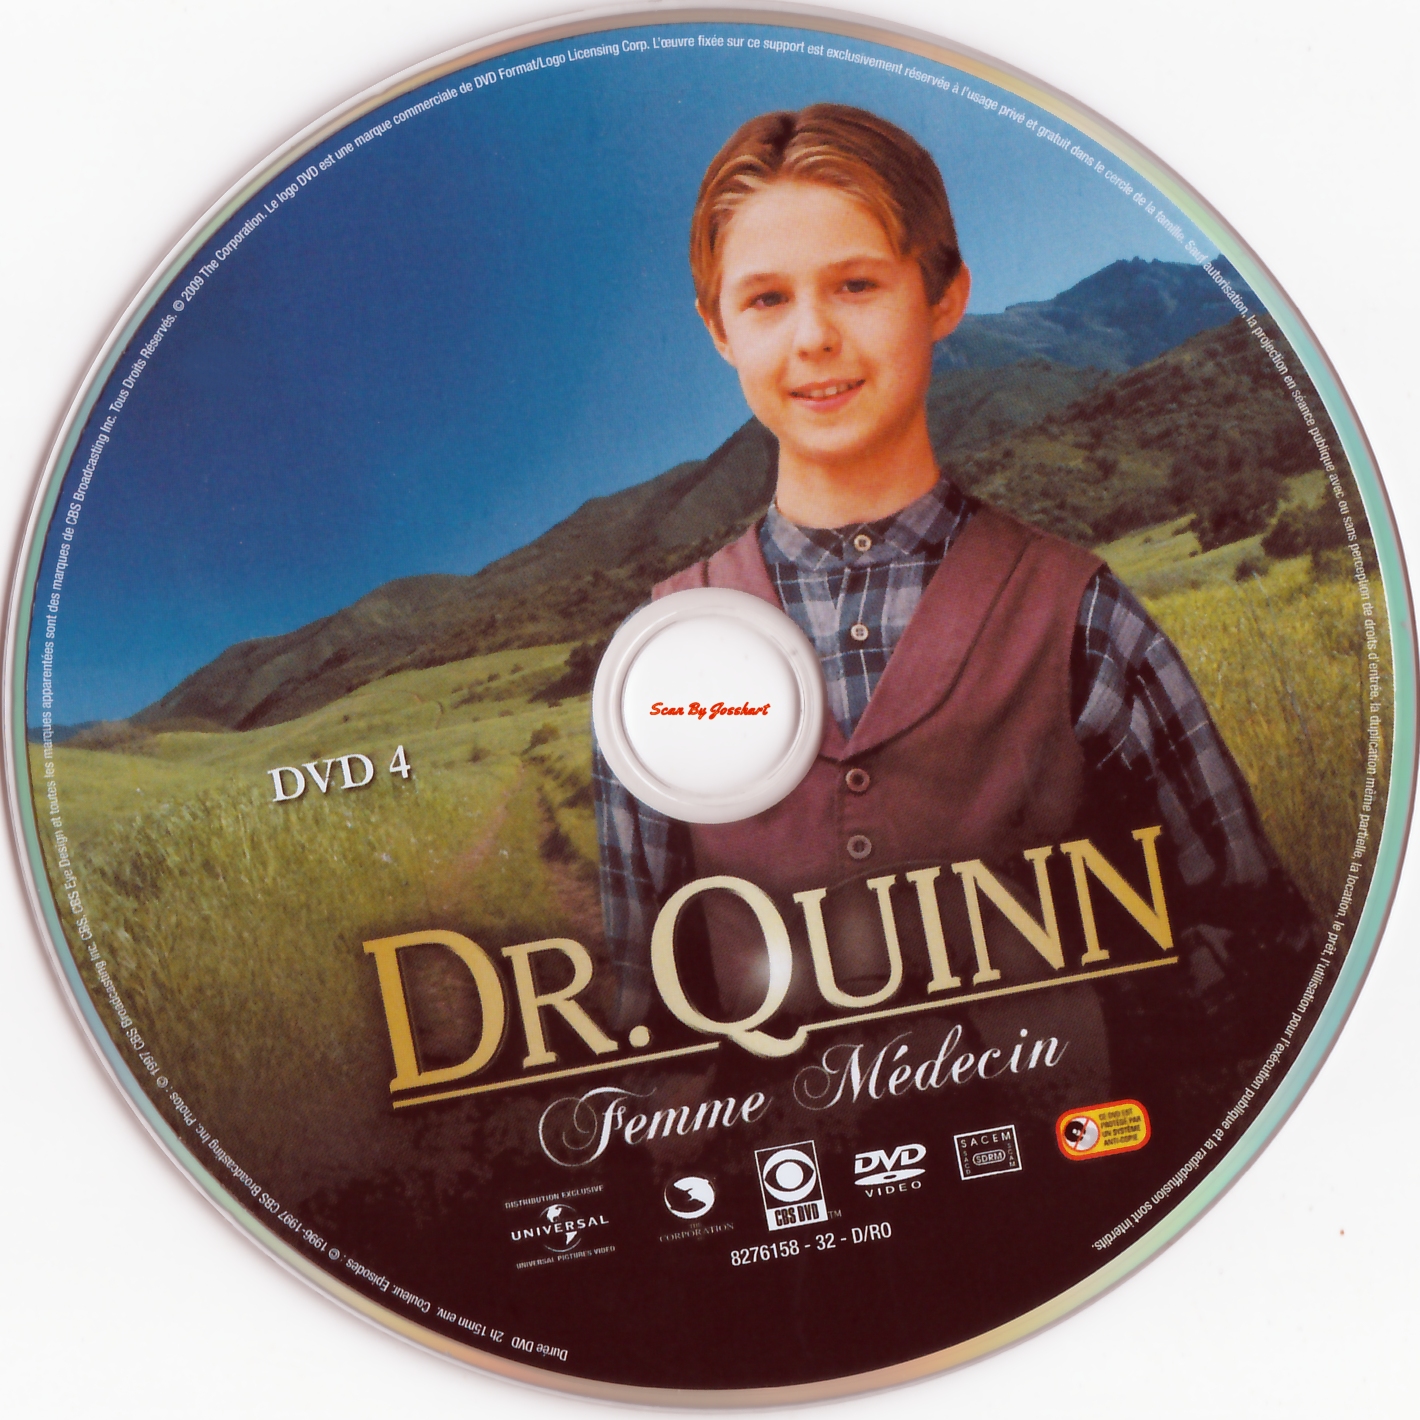 Docteur Quinn femme mdecin - Integrale Saison 5 DISC 4